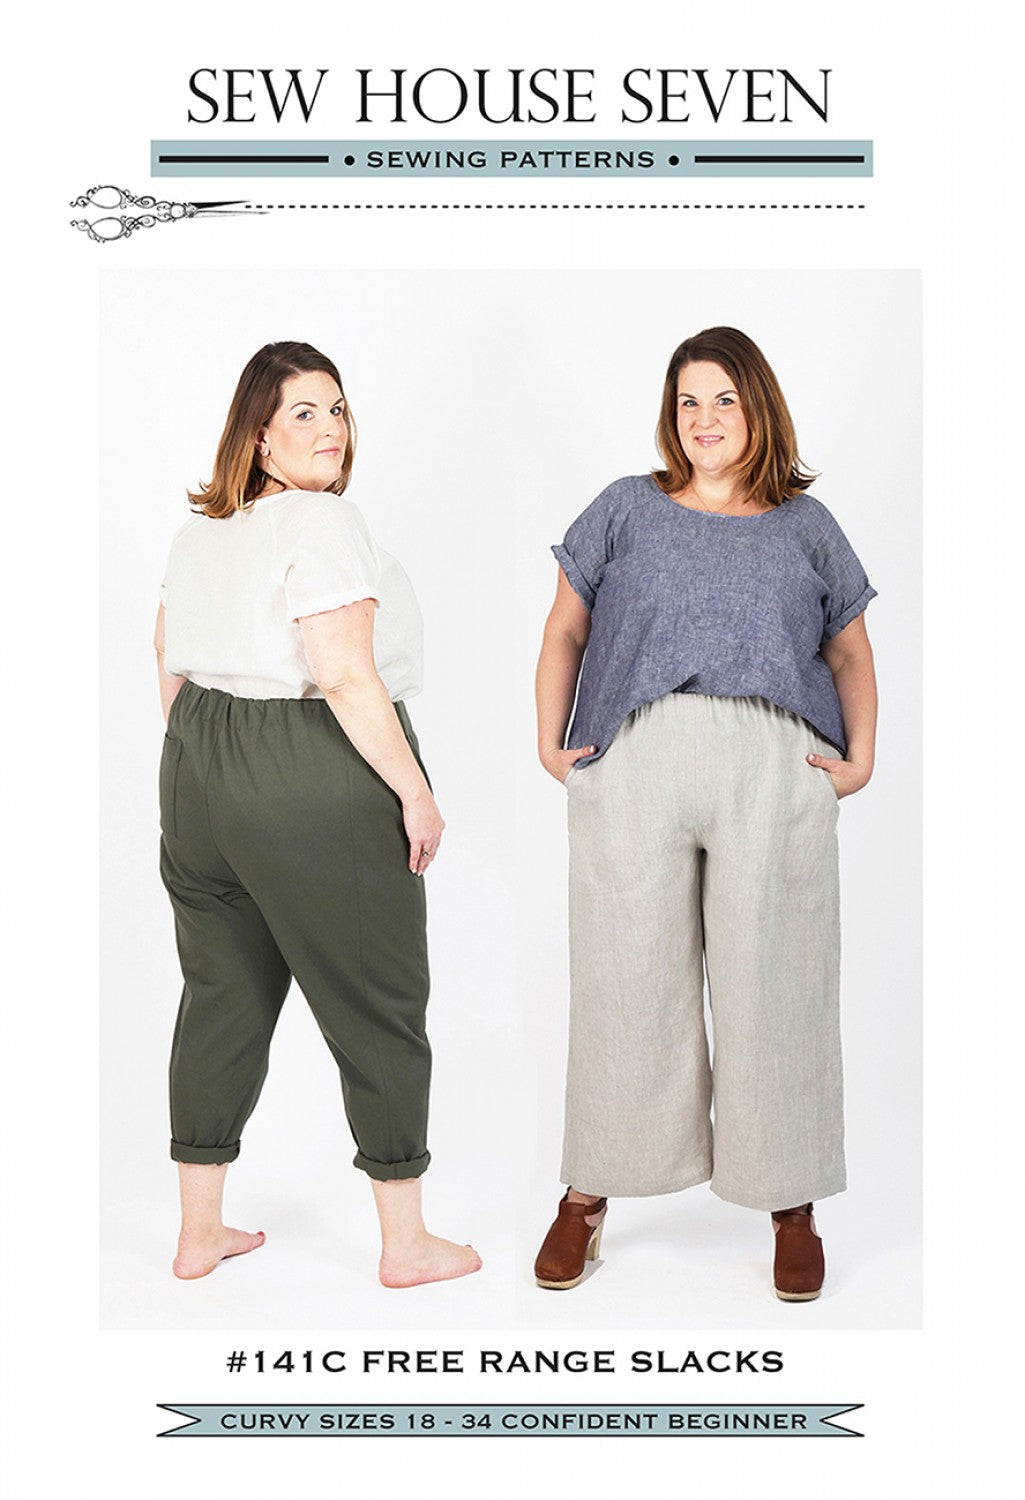 Women's Pant Suit Sewing Patterns Pdf Size 8-18 US,36-46 EU -  Canada